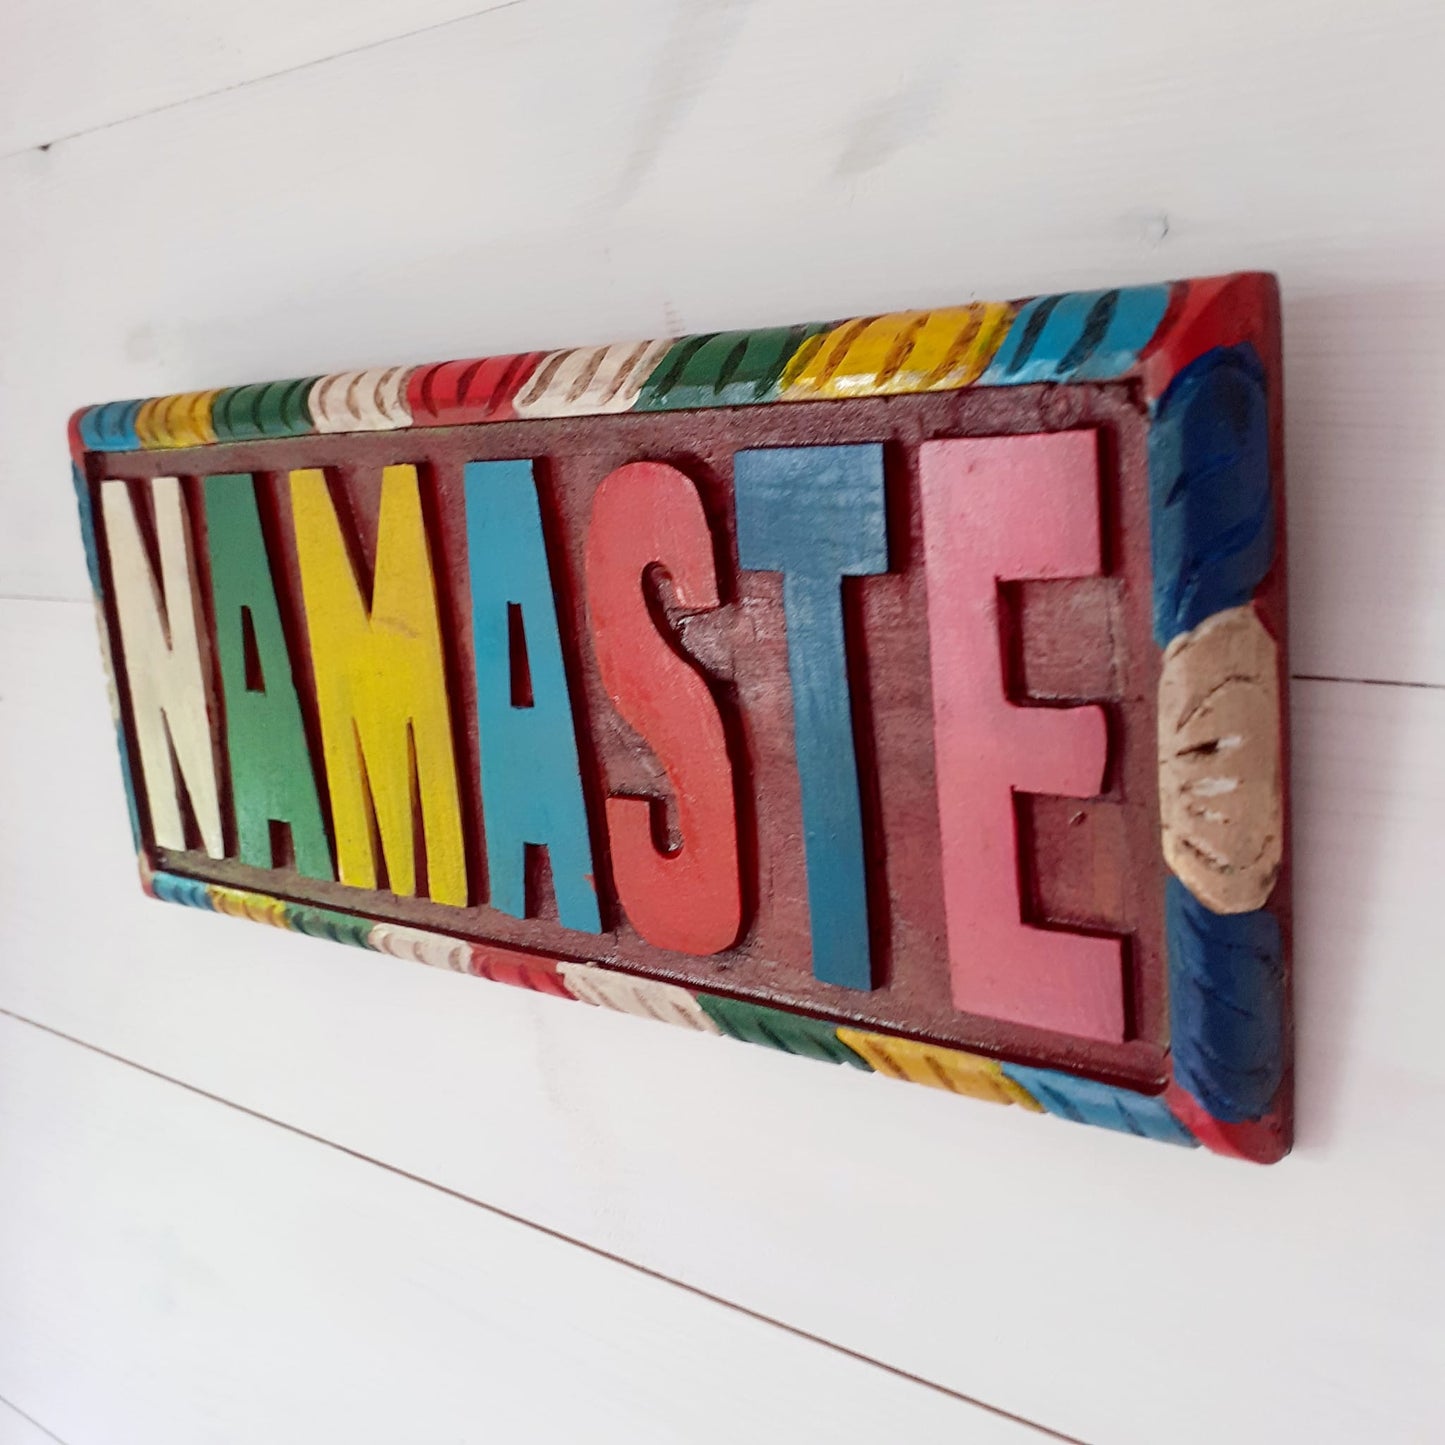 Namaste sign wooden wall décor 25 x 10 cm